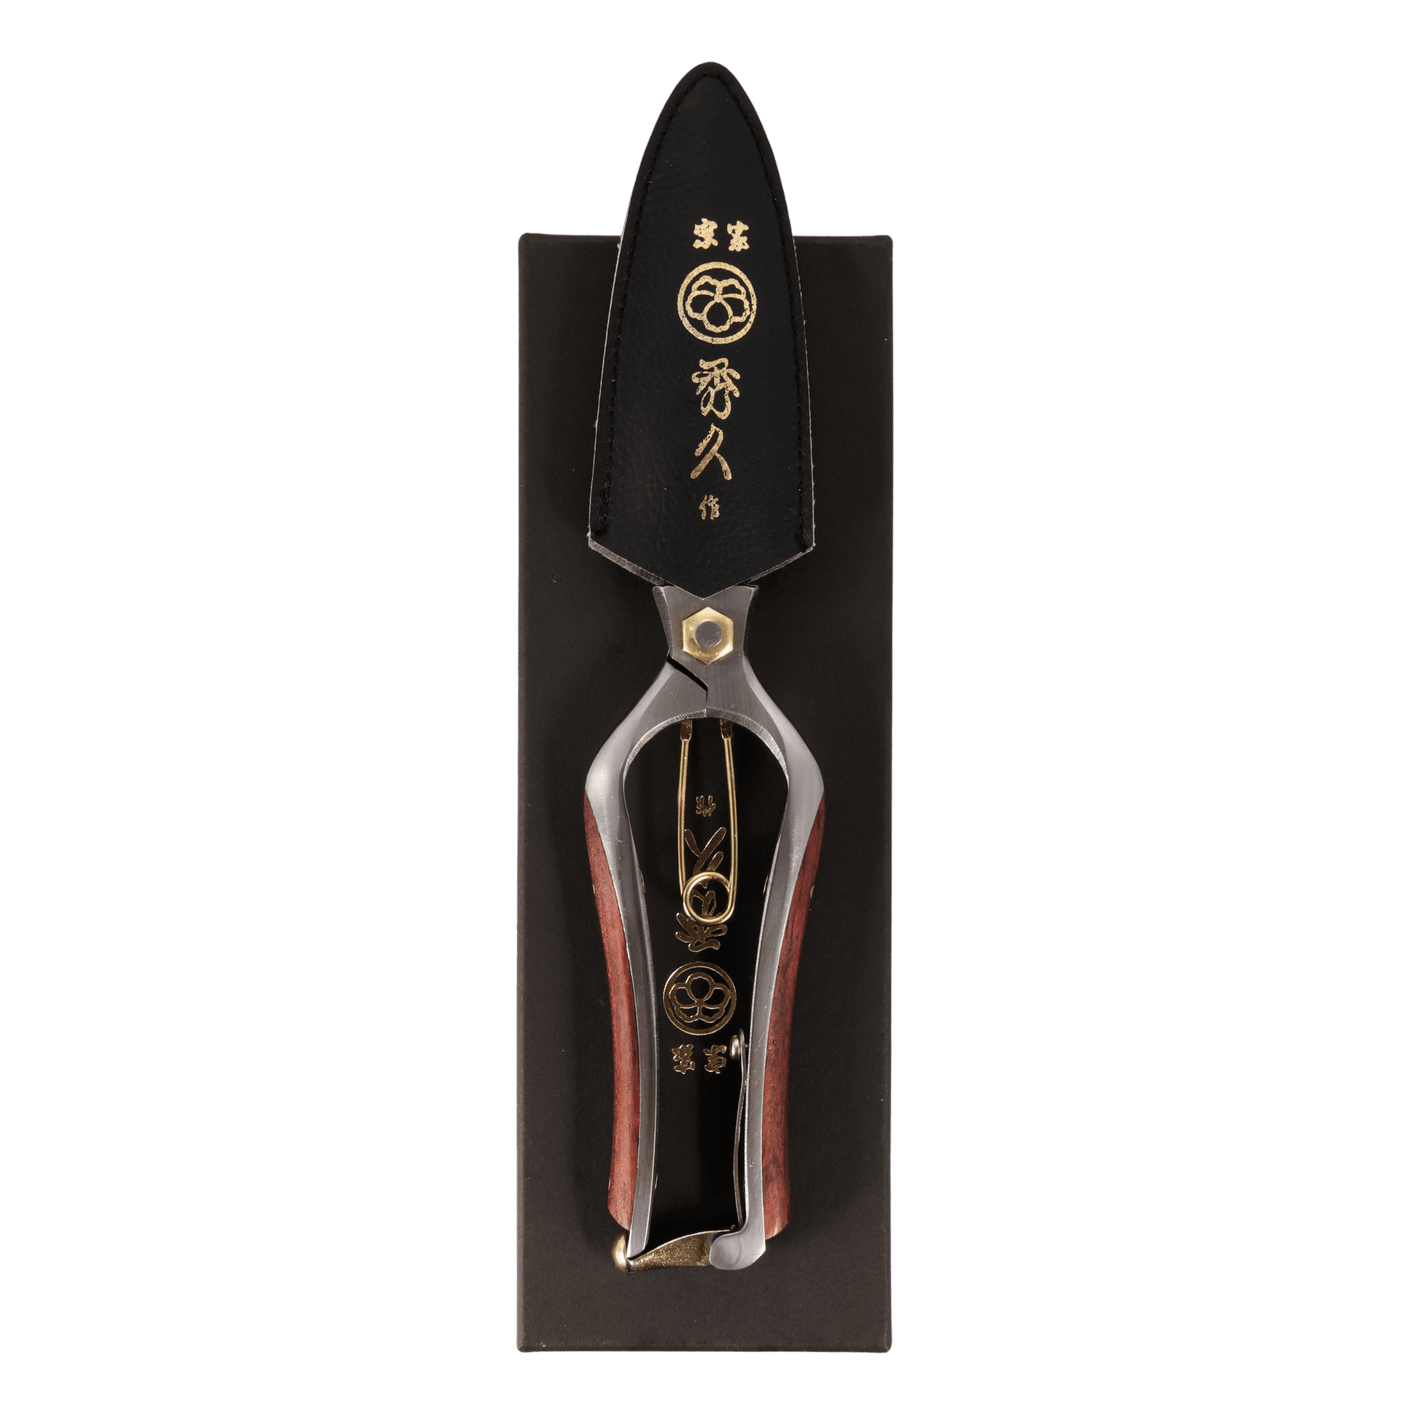 Handmade Japanese Snips - Bubinga Handle - Secateurs - Japanese Tools Australia